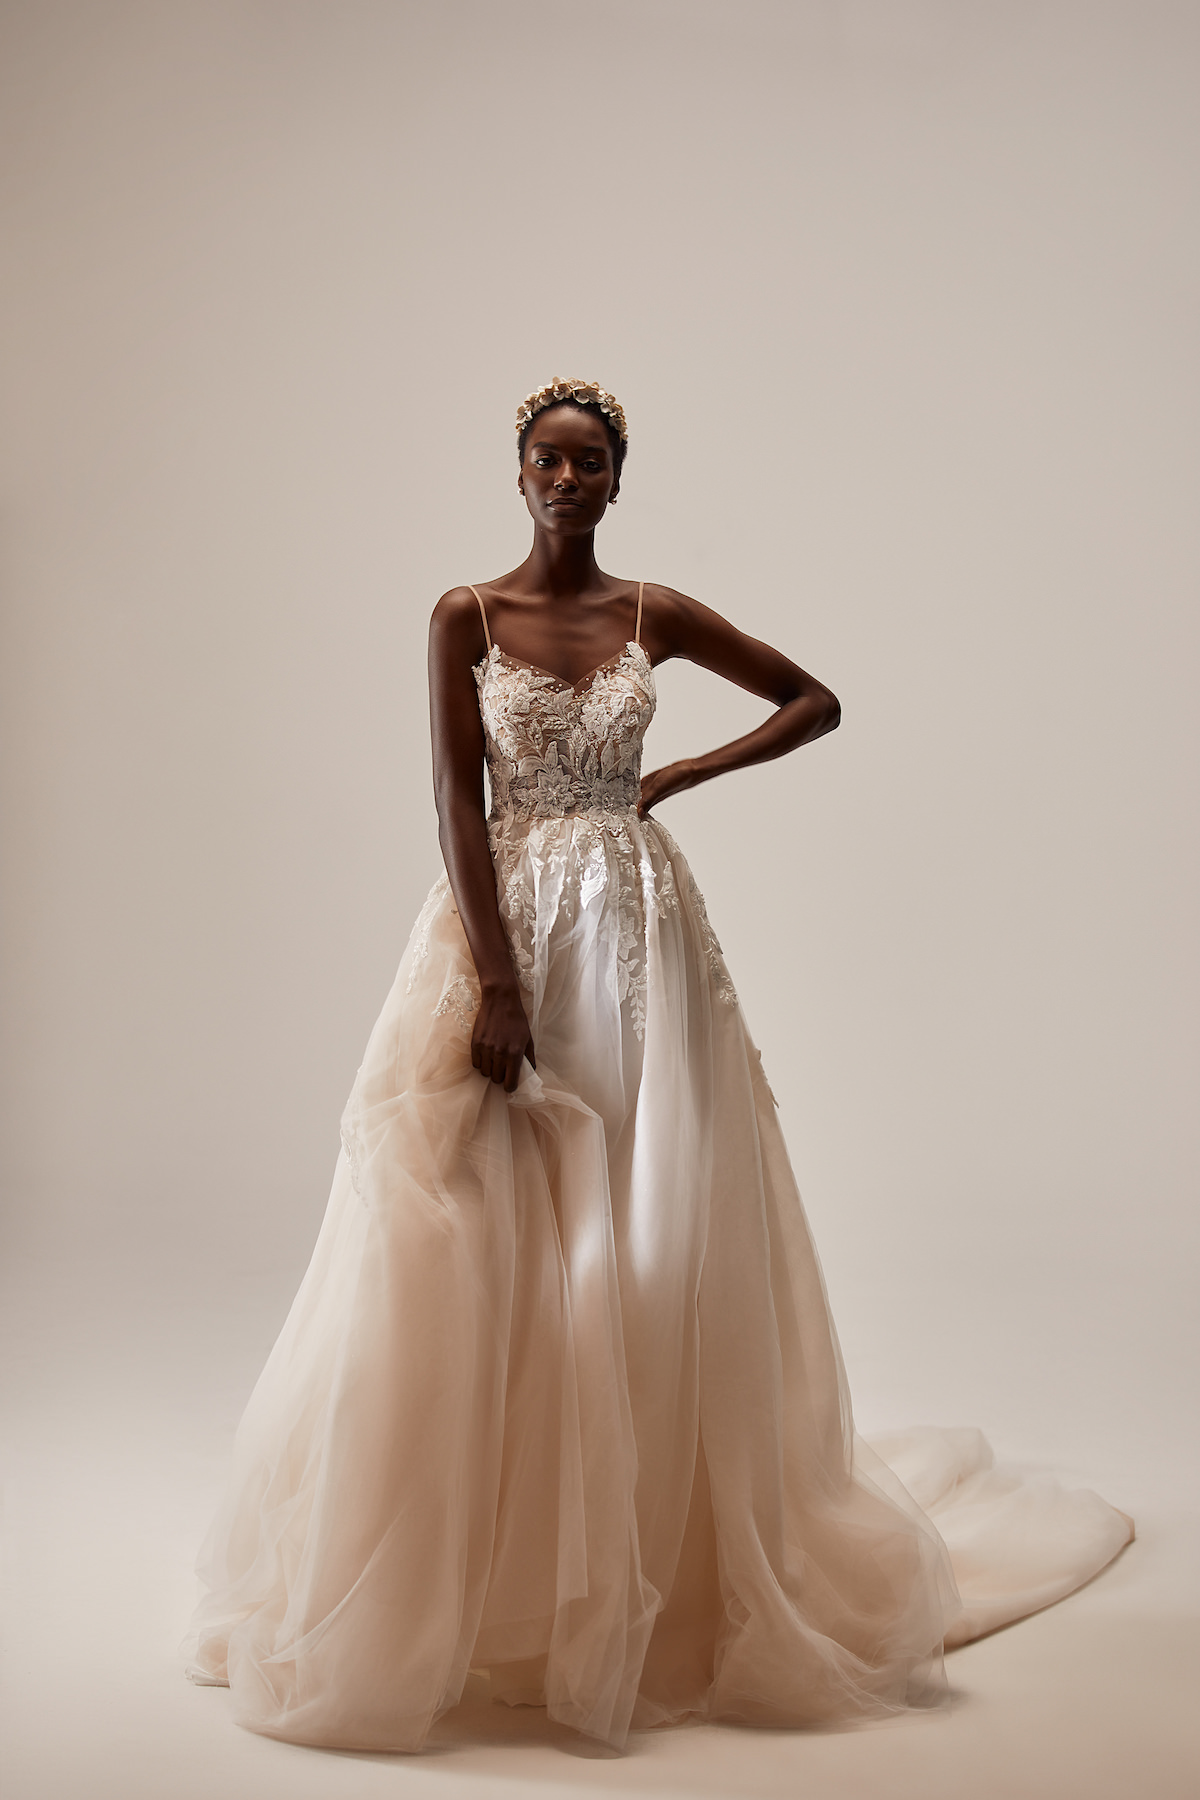 Lace and tulle Wedding Dress by Milla Nova - Carolina white lace